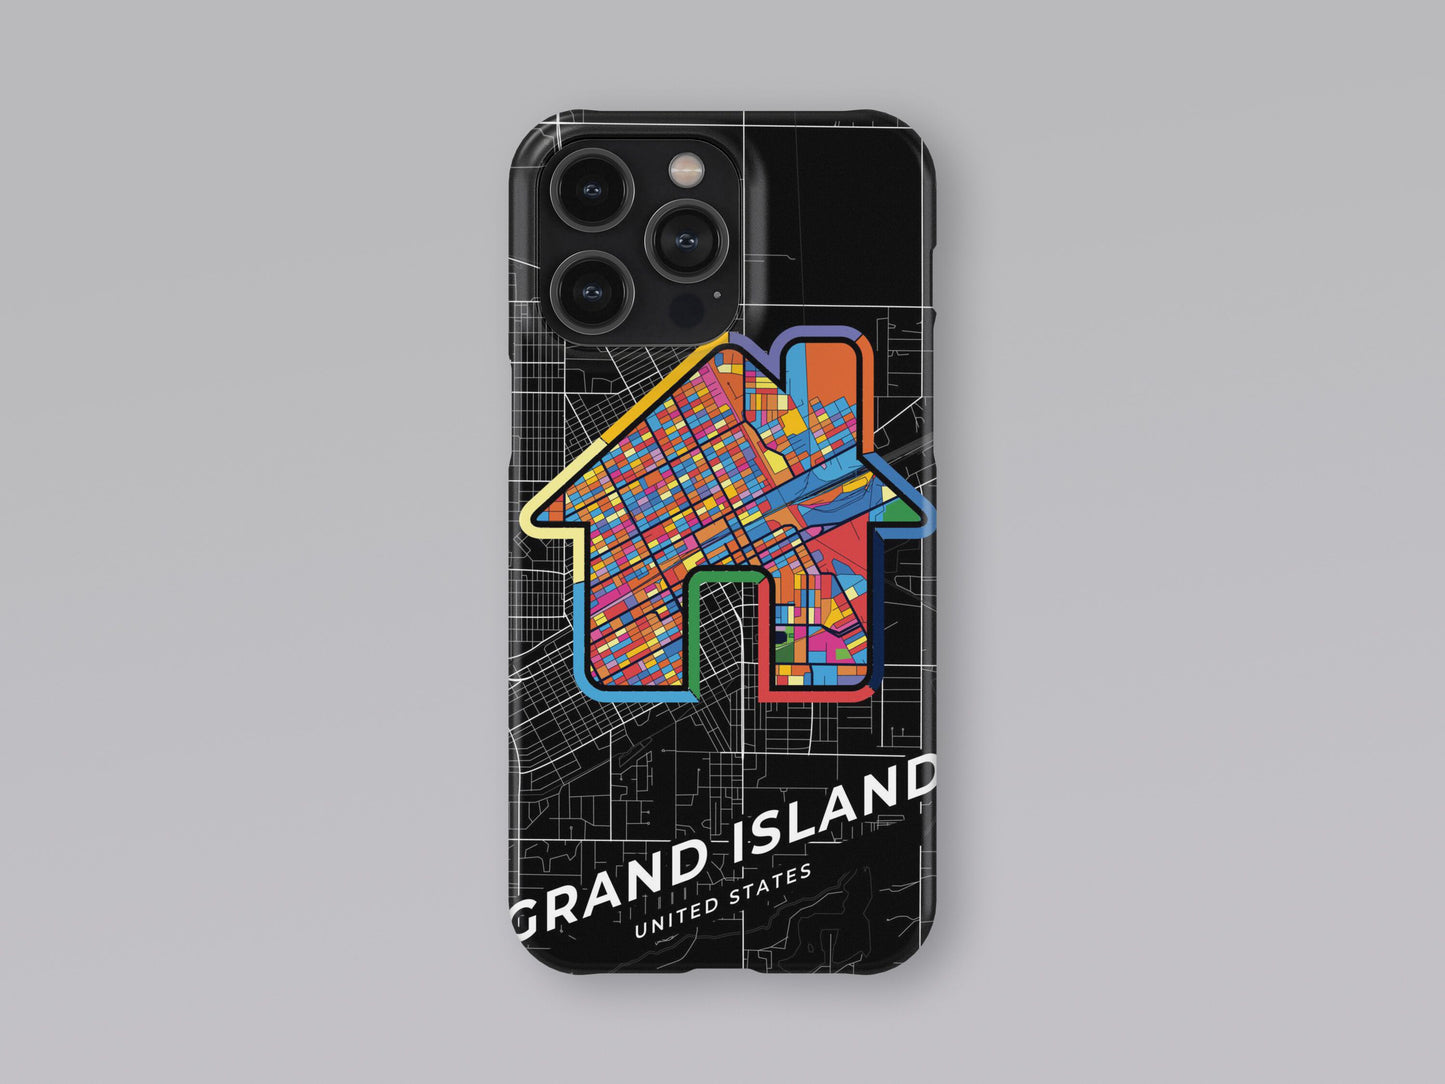 Grand Island Nebraska slim phone case with colorful icon. Birthday, wedding or housewarming gift. Couple match cases. 3